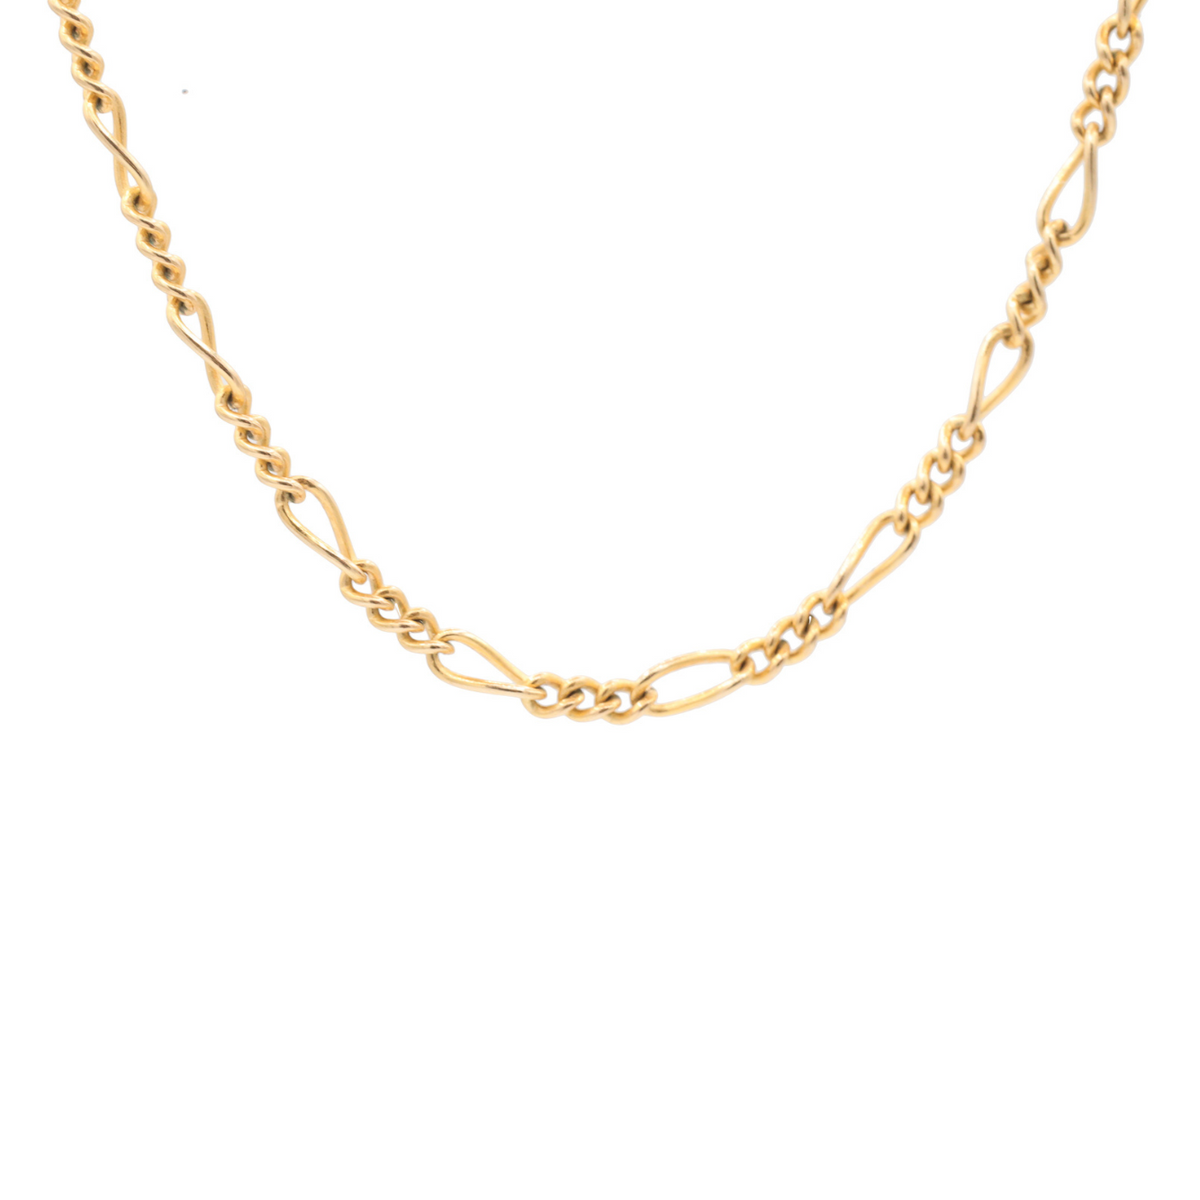 Figaro necklace - 14K gold filled